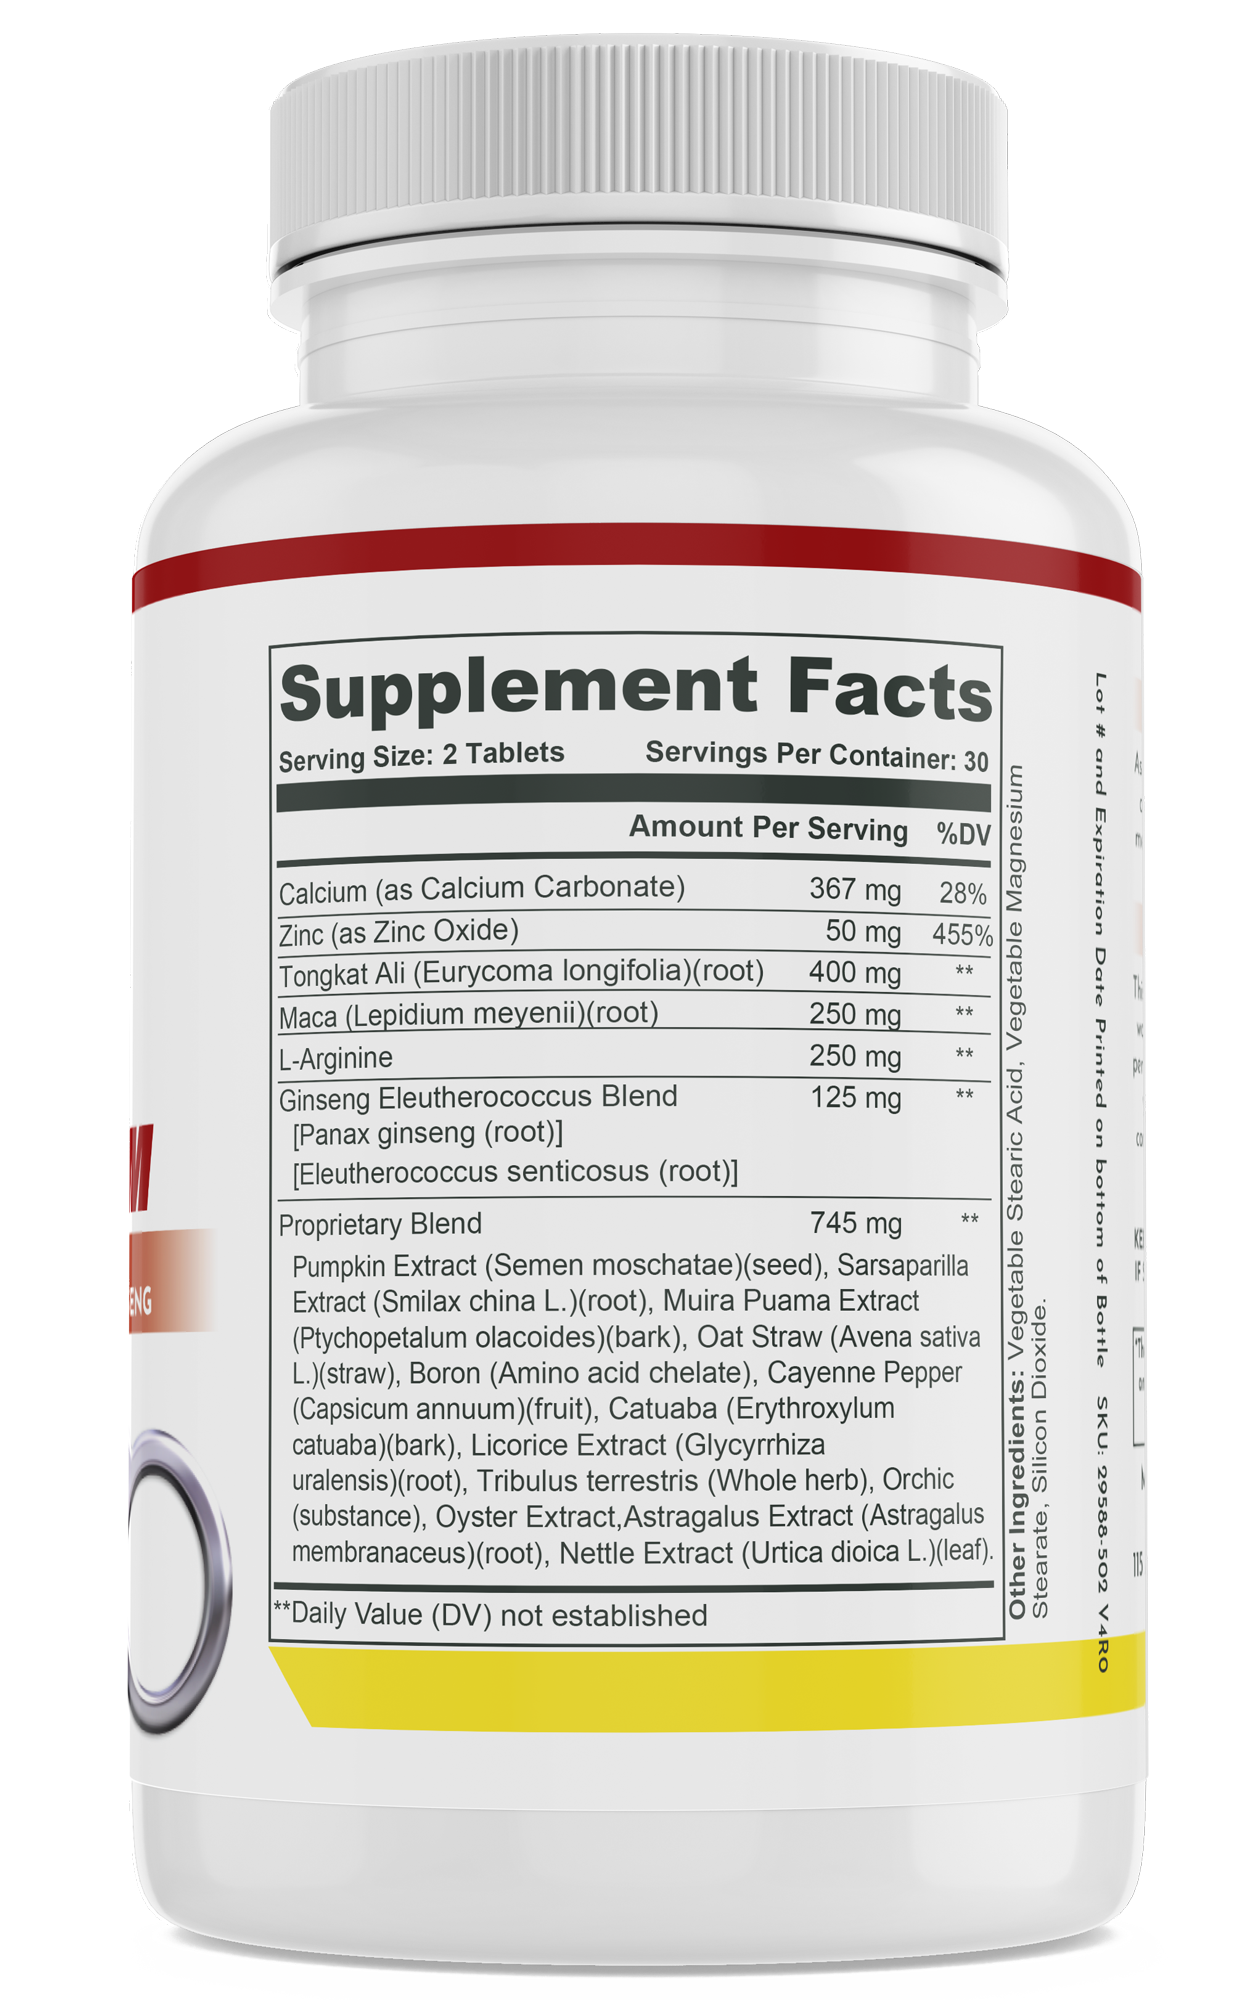 Supplement facts on a bottle of Long & Firm male enhancement pills